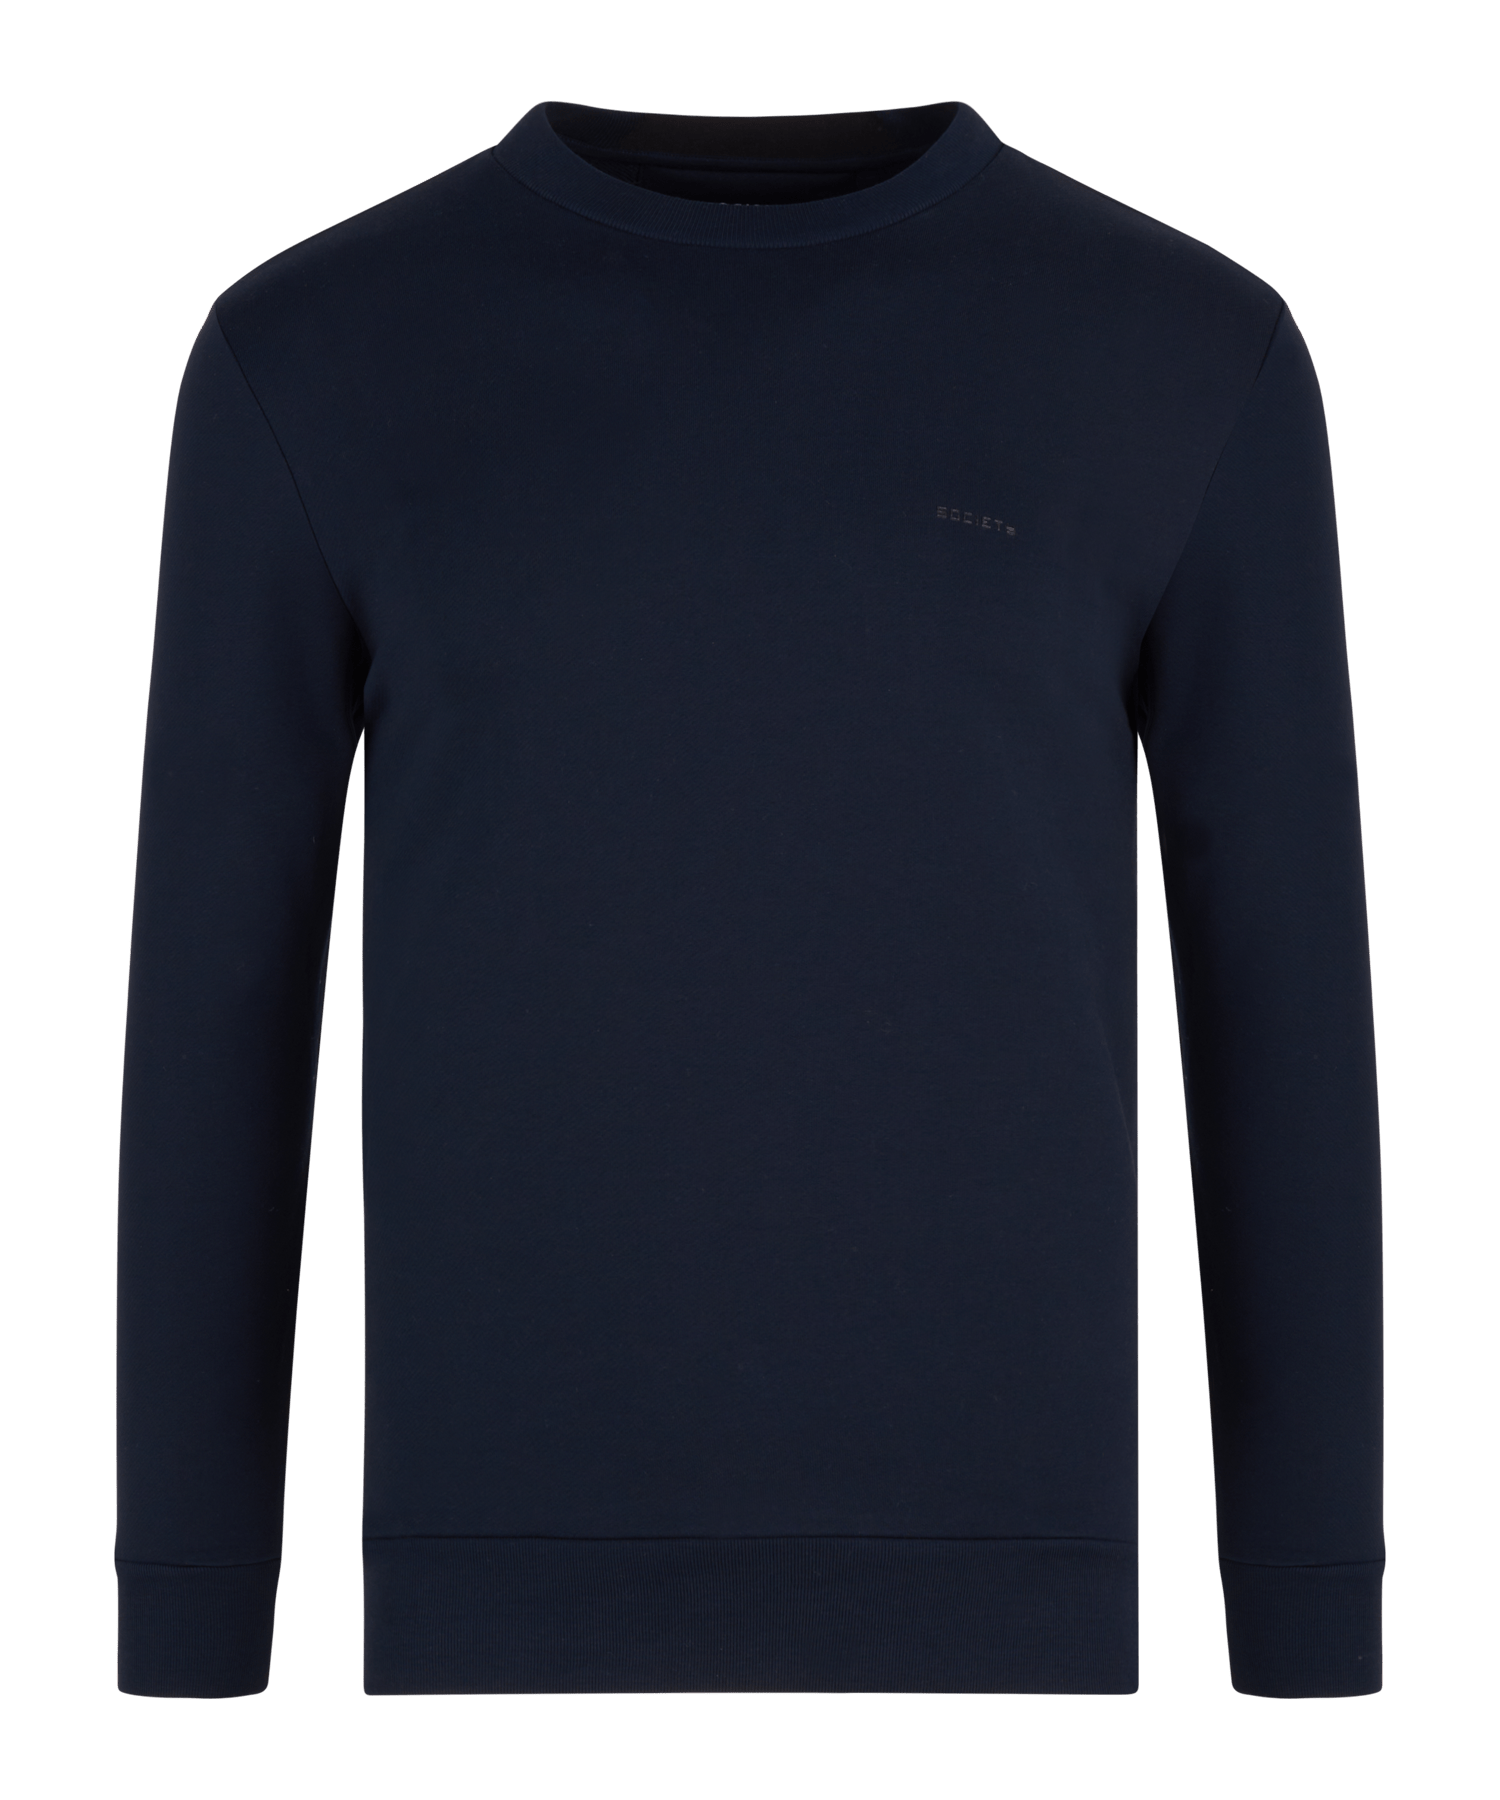 SOCI3TY sweater blauw katoen